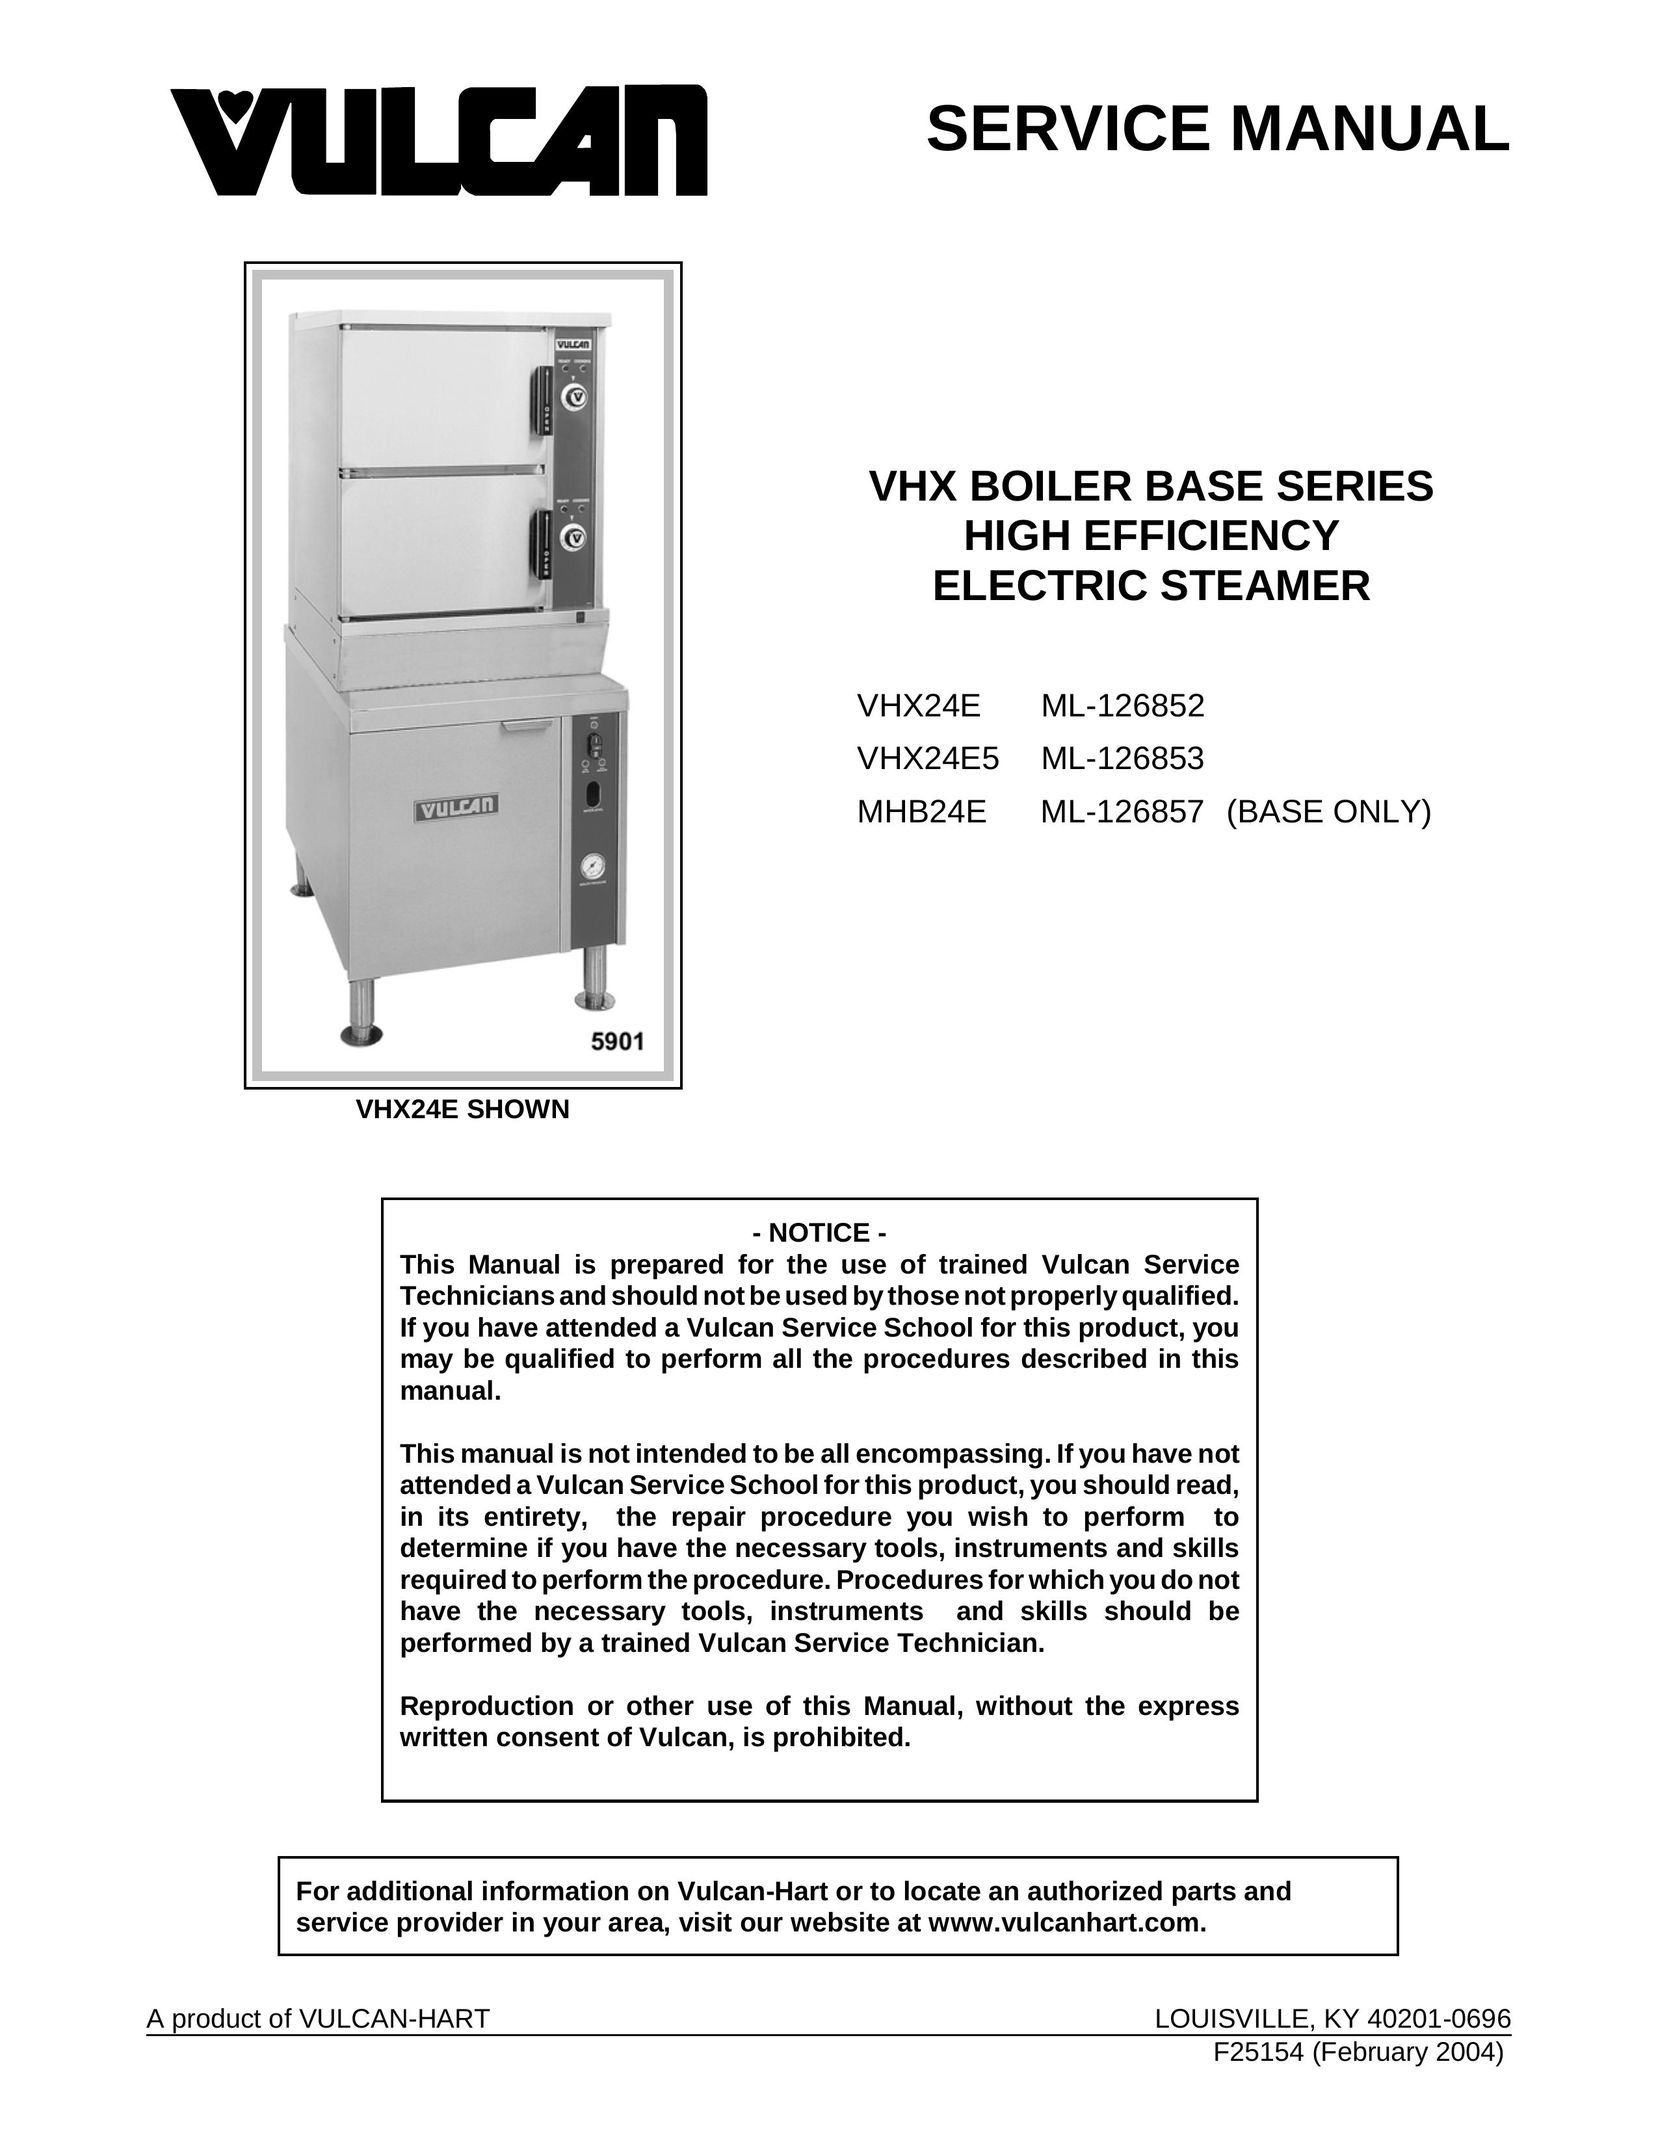 Vulcan-Hart VHX24E Electric Steamer User Manual